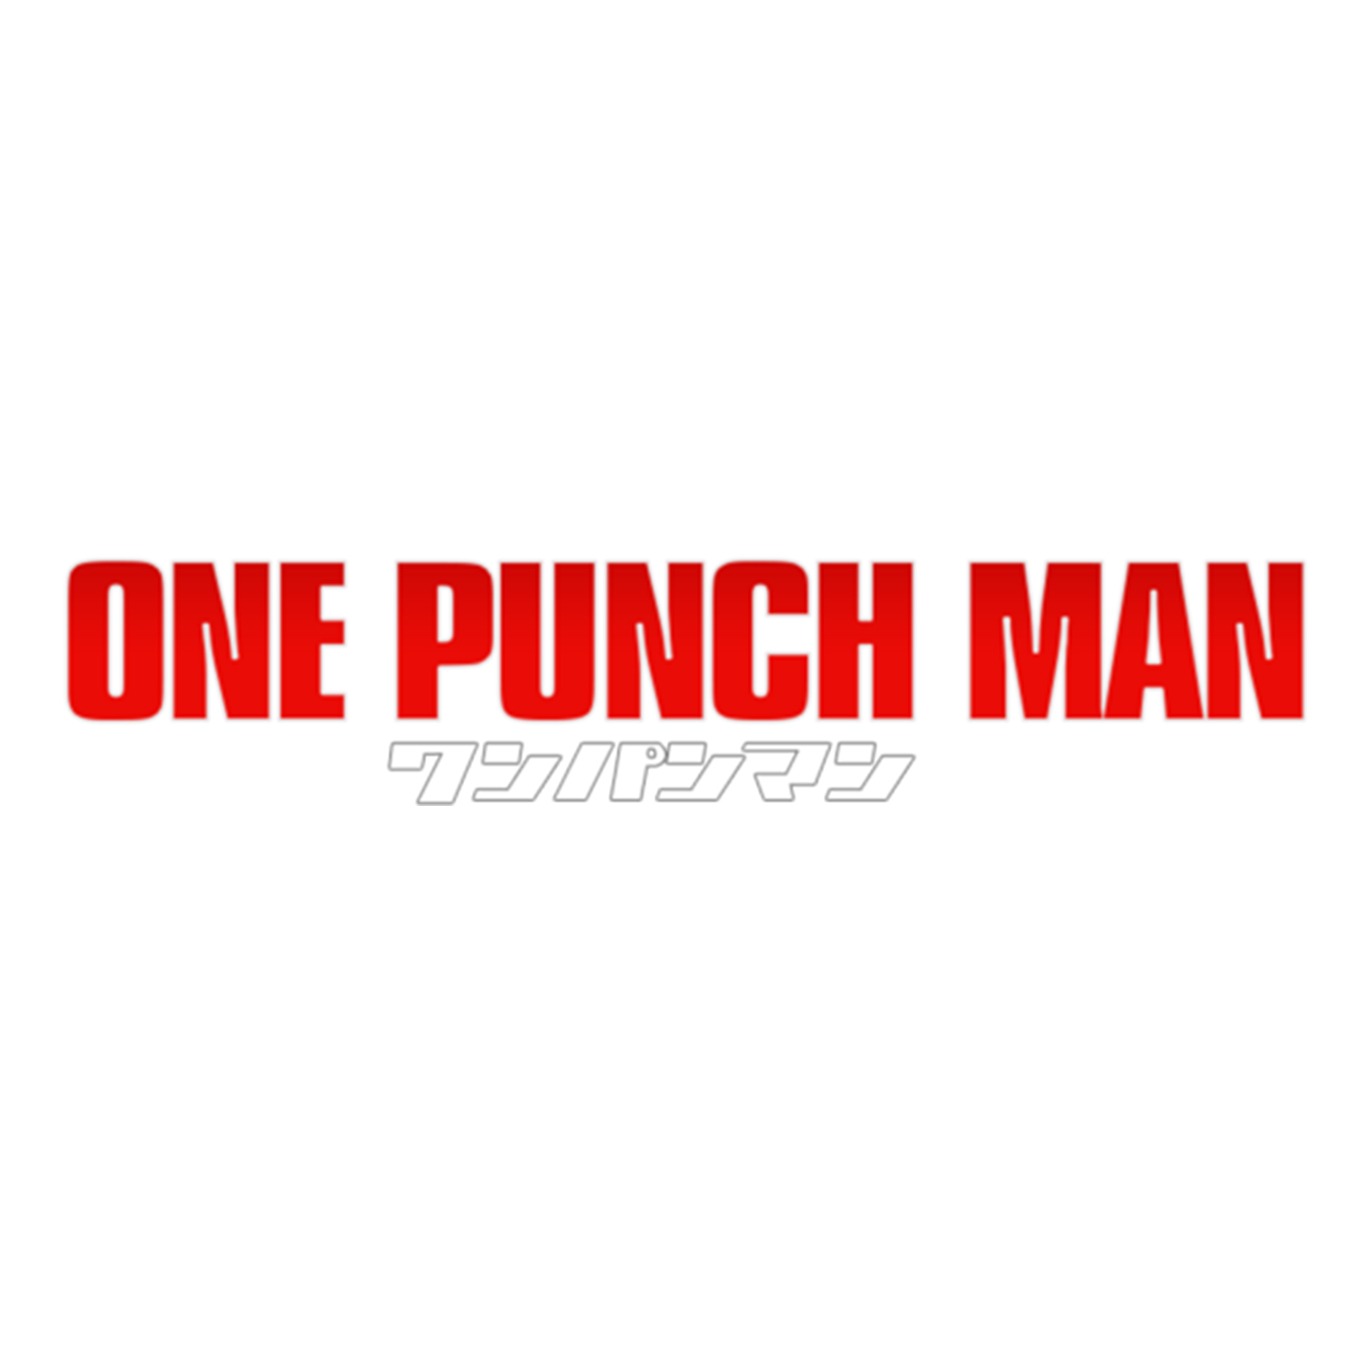 One Pounch Man